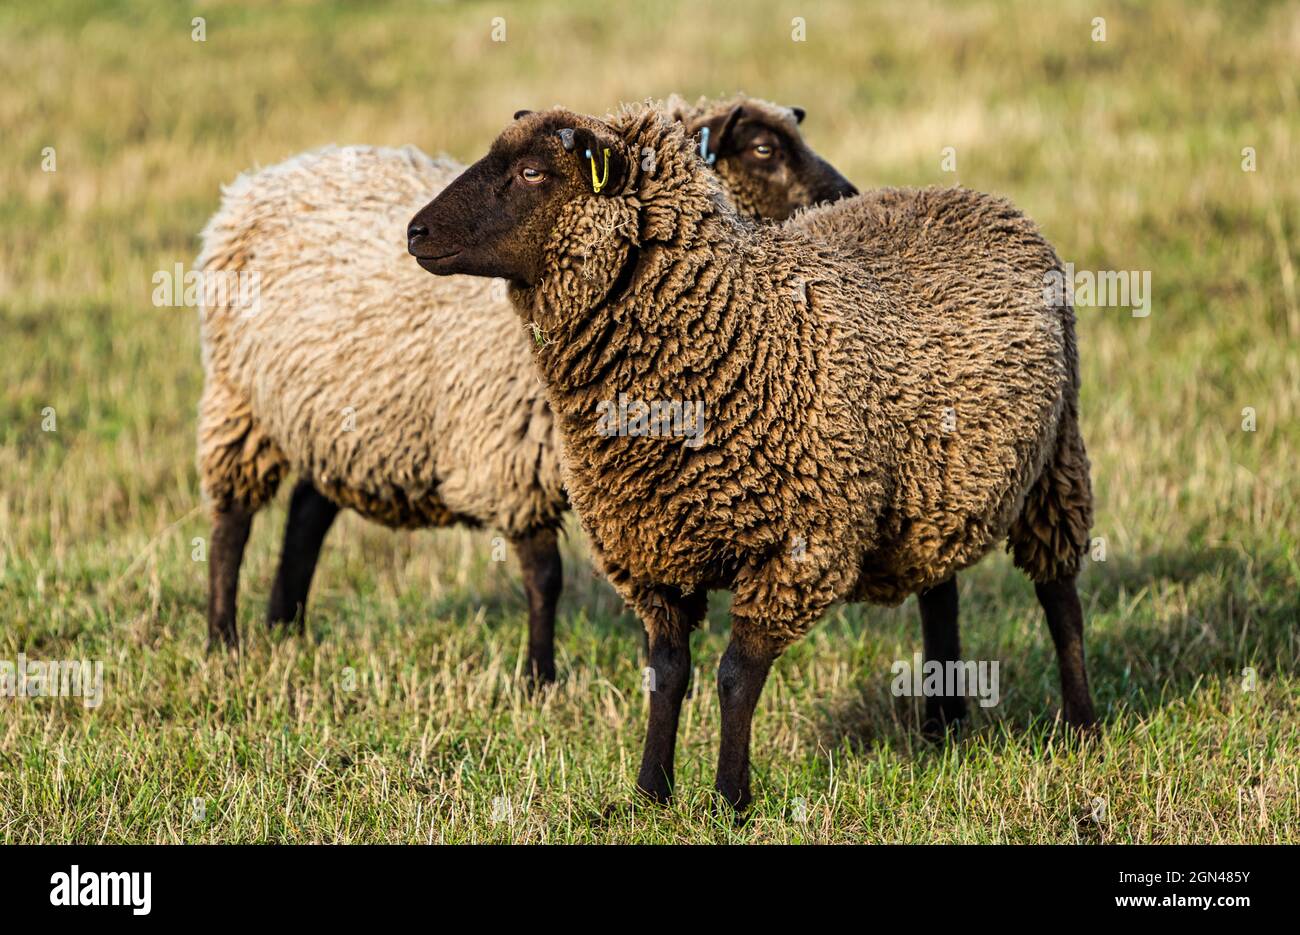 Young male Shetland sheep in grass field in sunshine, East Lothian, Scotland, UK Stock Photo